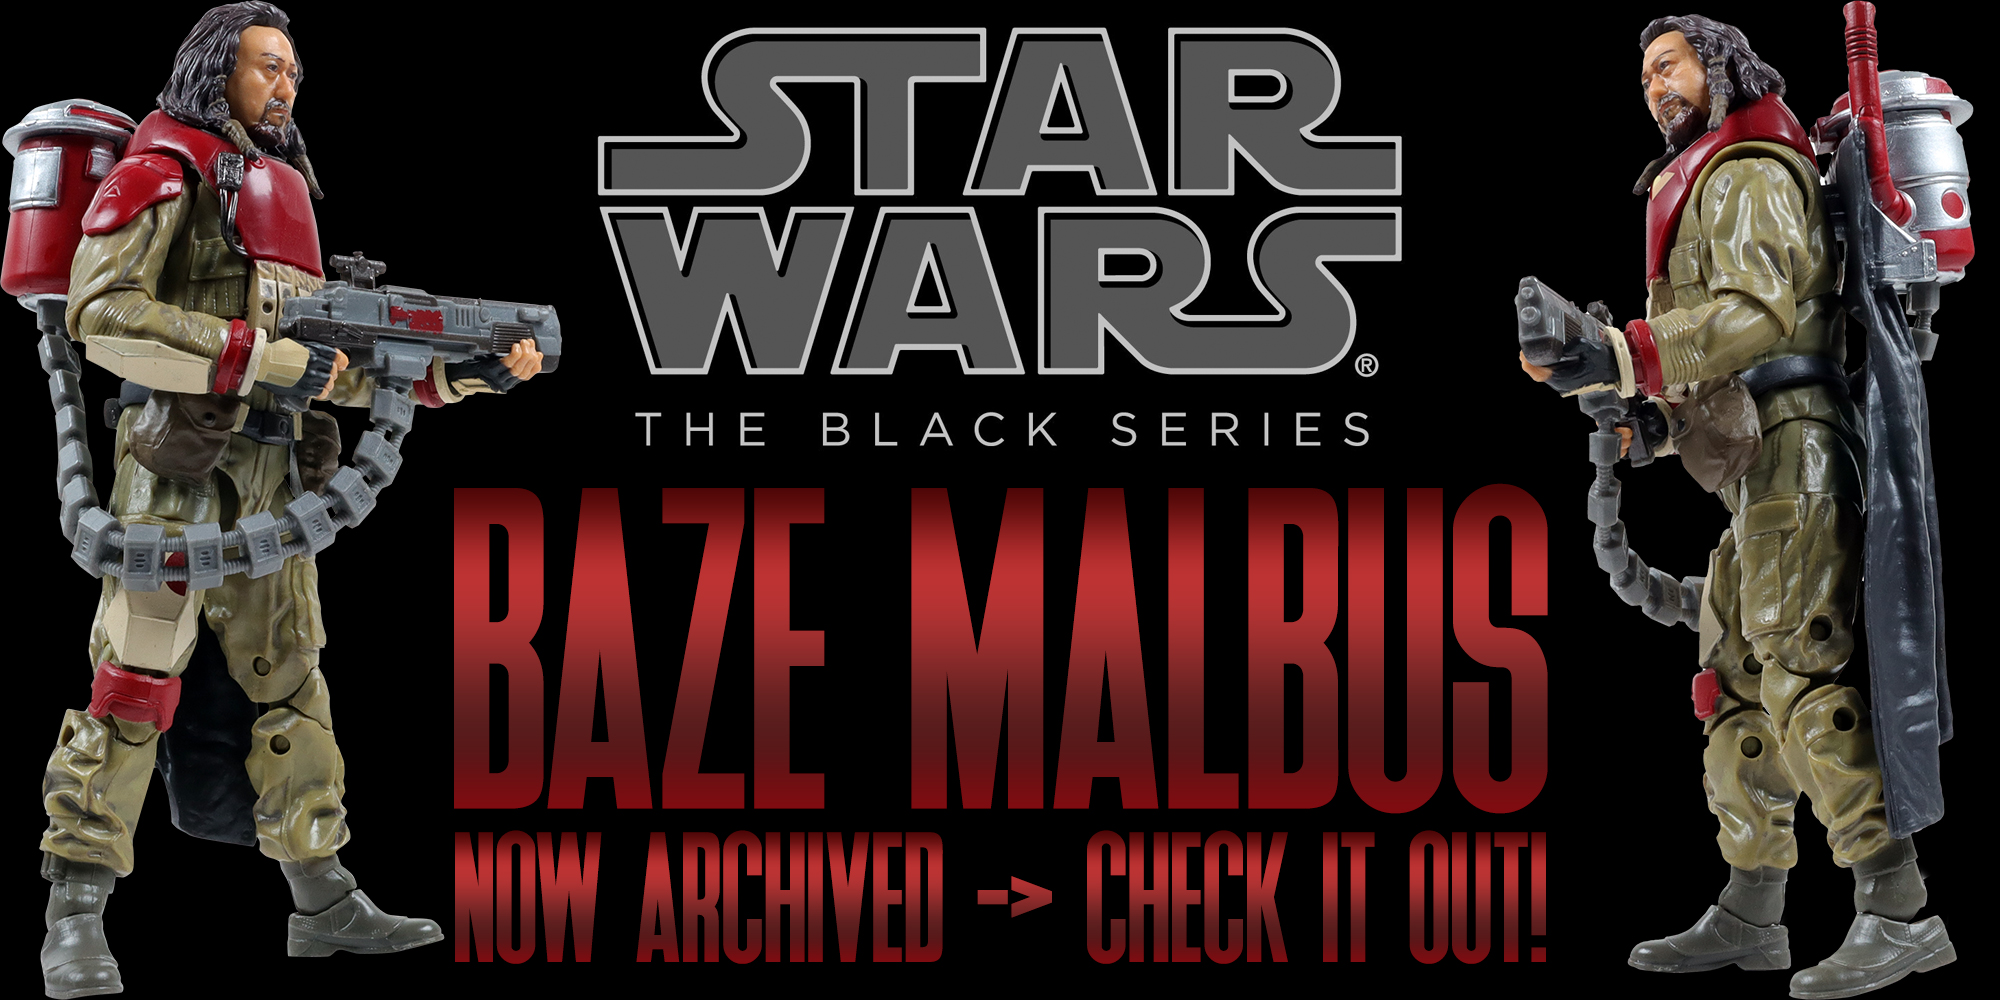 Black Series Baze Malbus Added